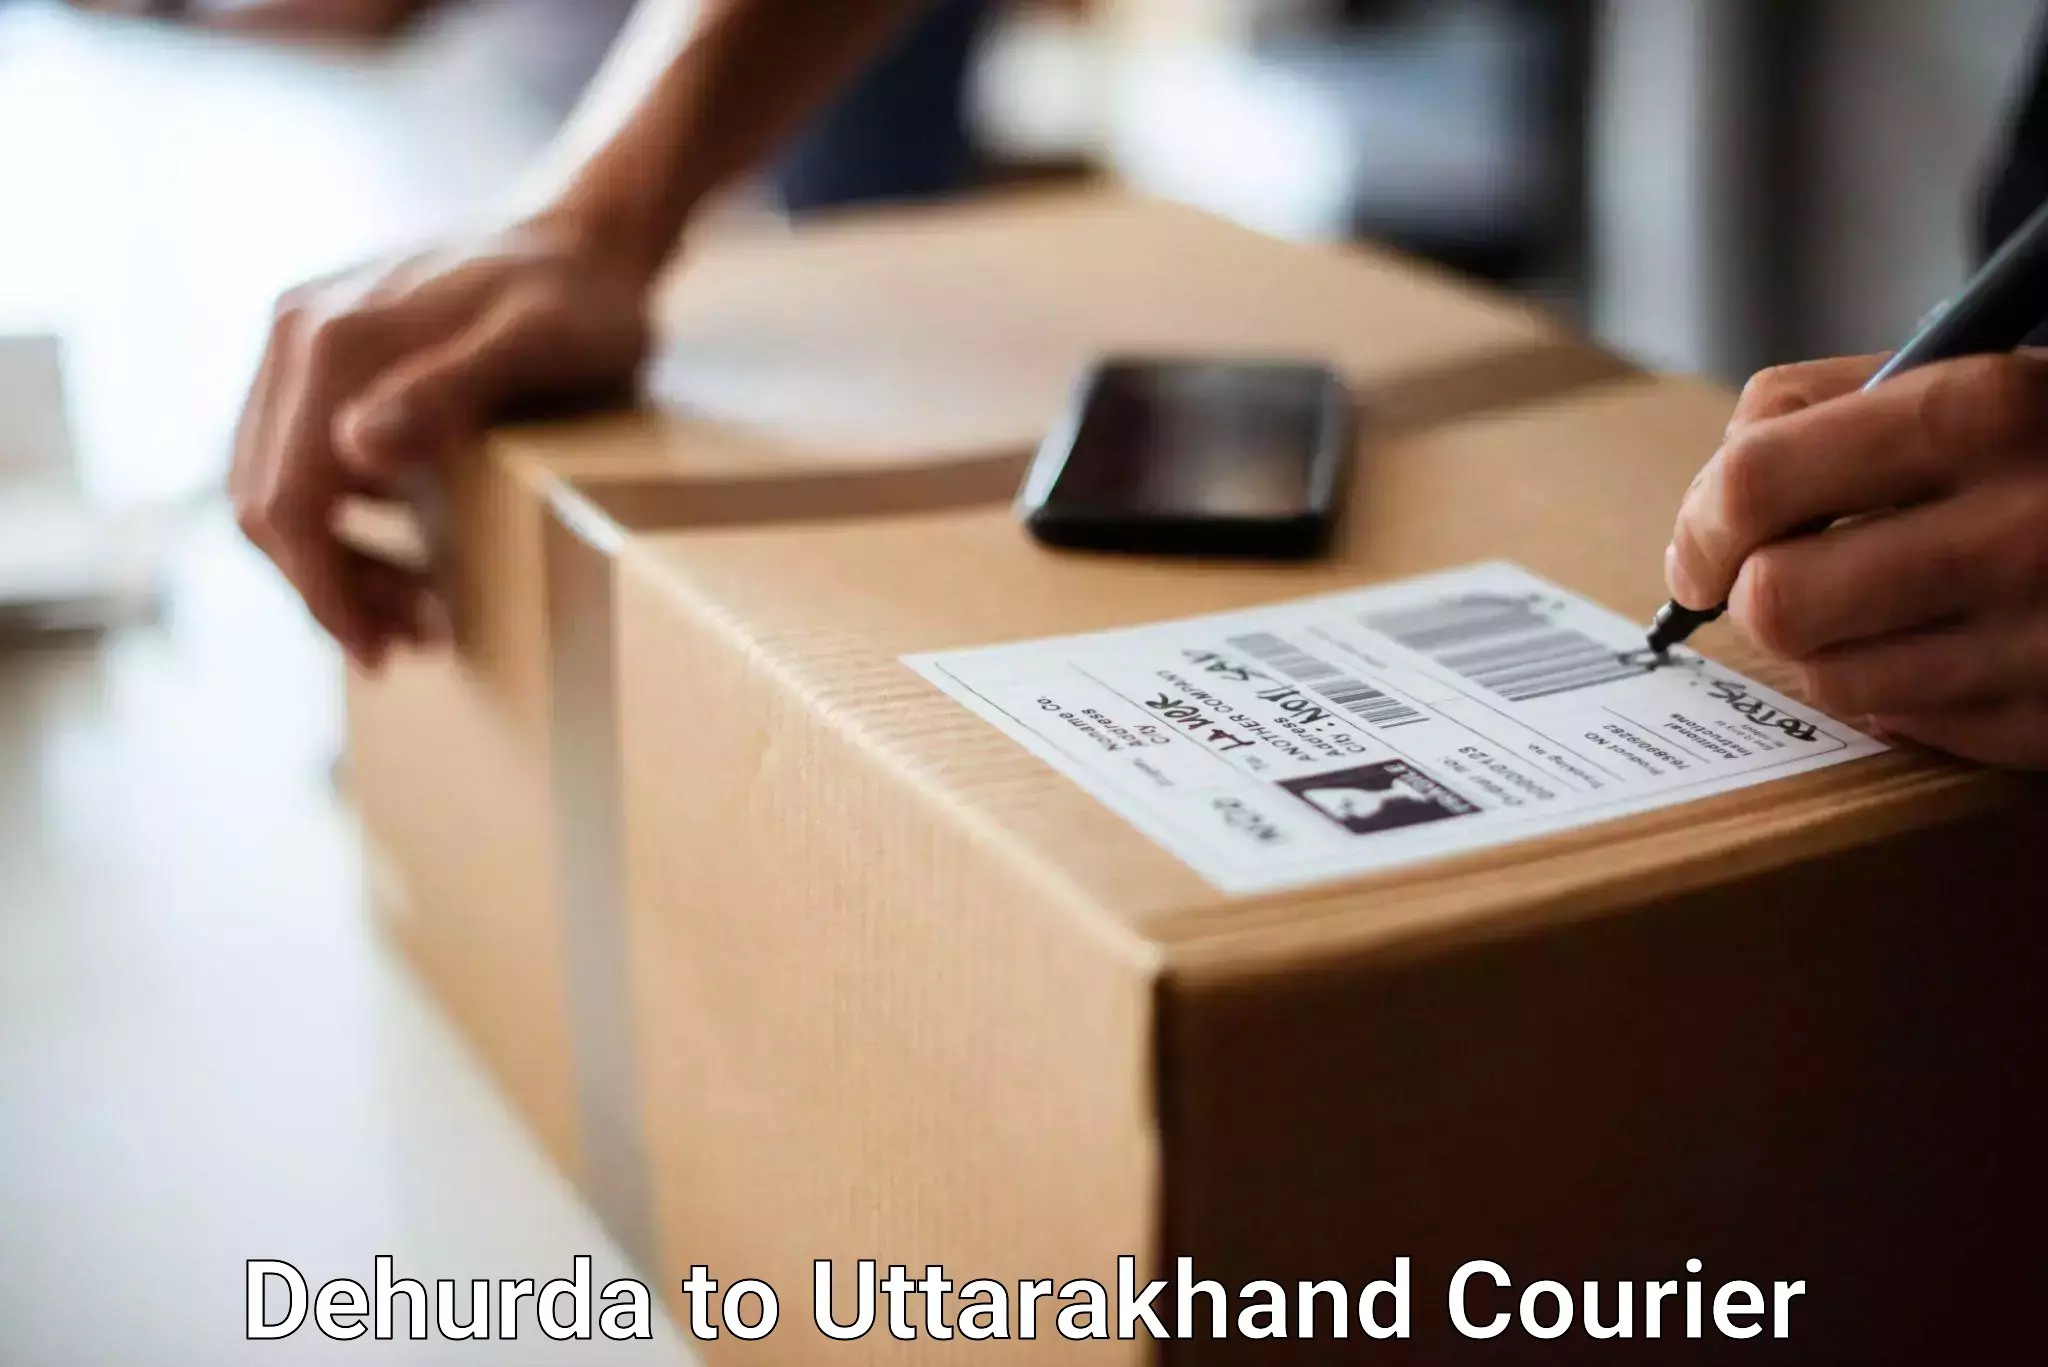 Express luggage delivery Dehurda to Haridwar